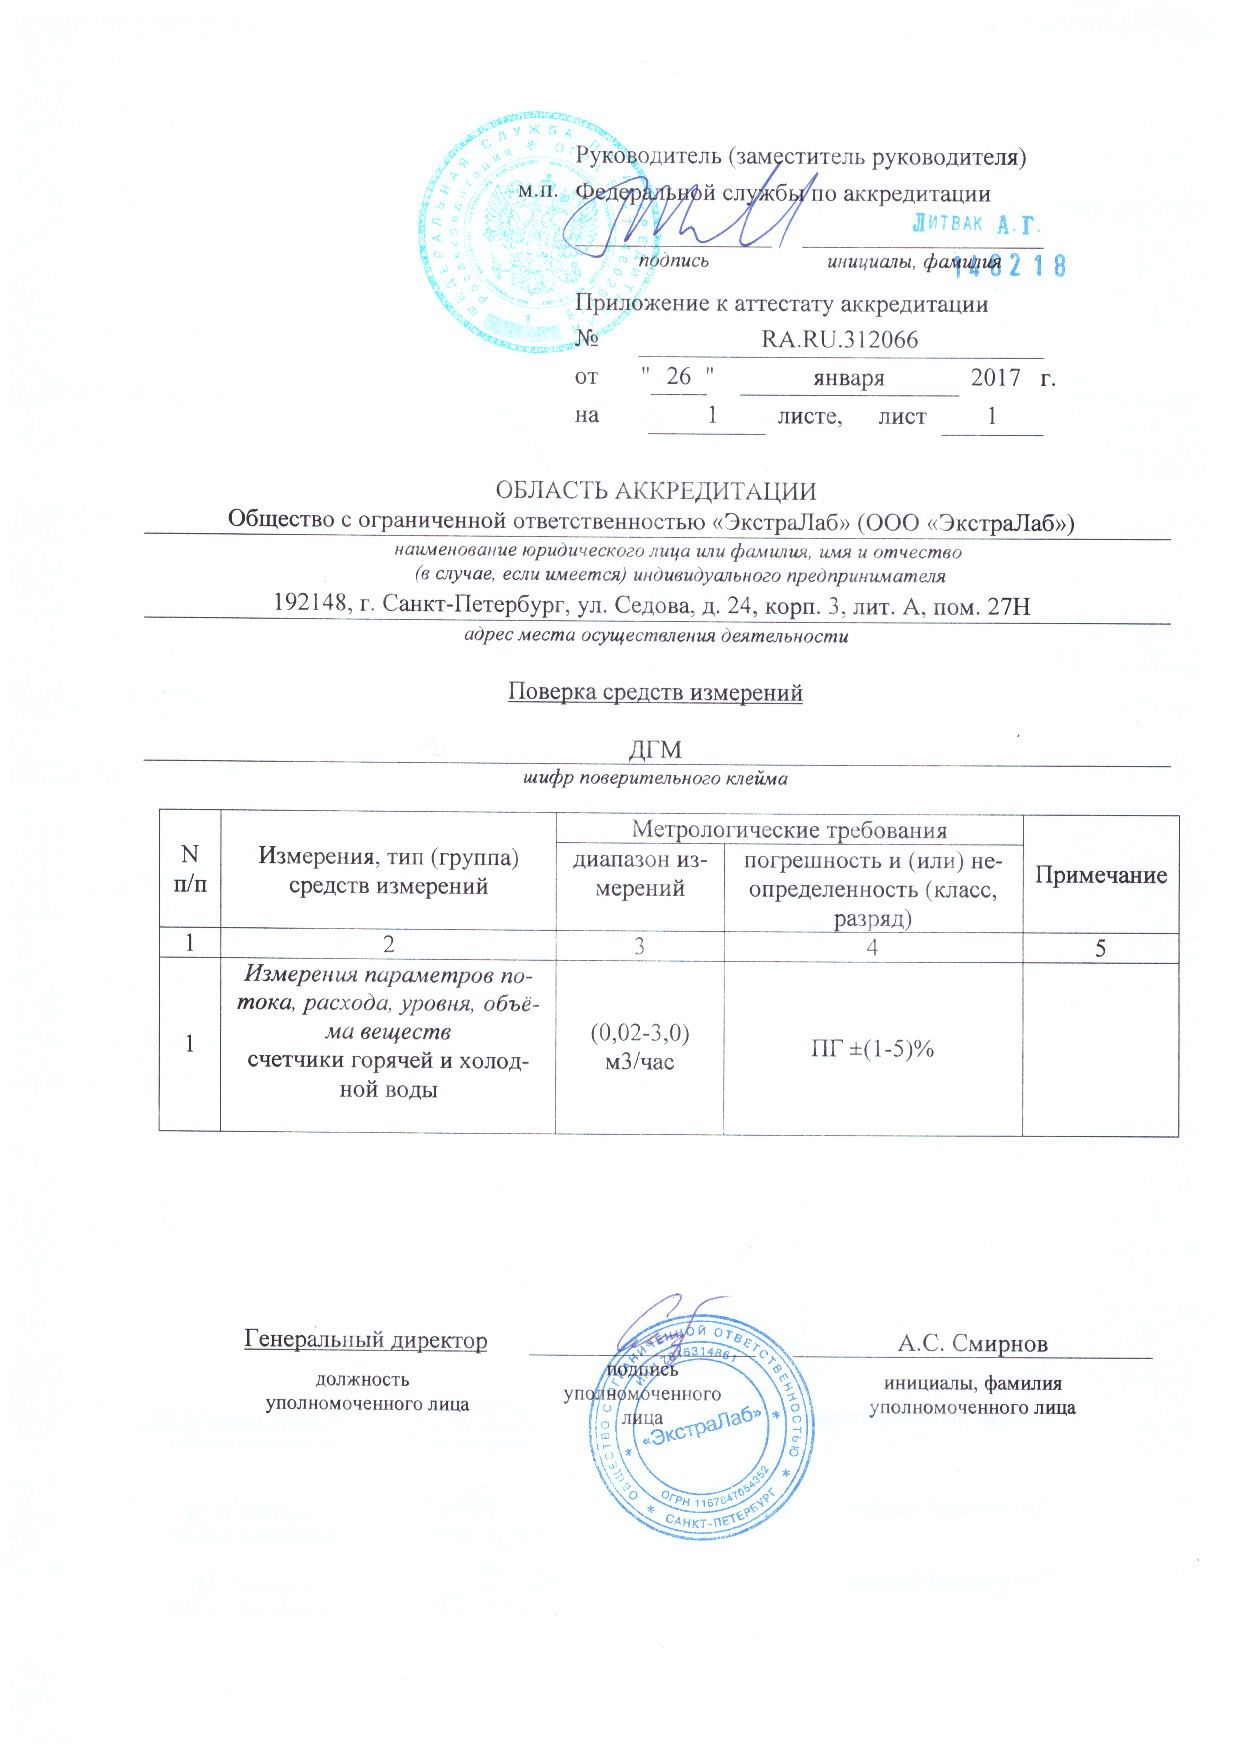 Сертификат «ЭкстраЛаб»